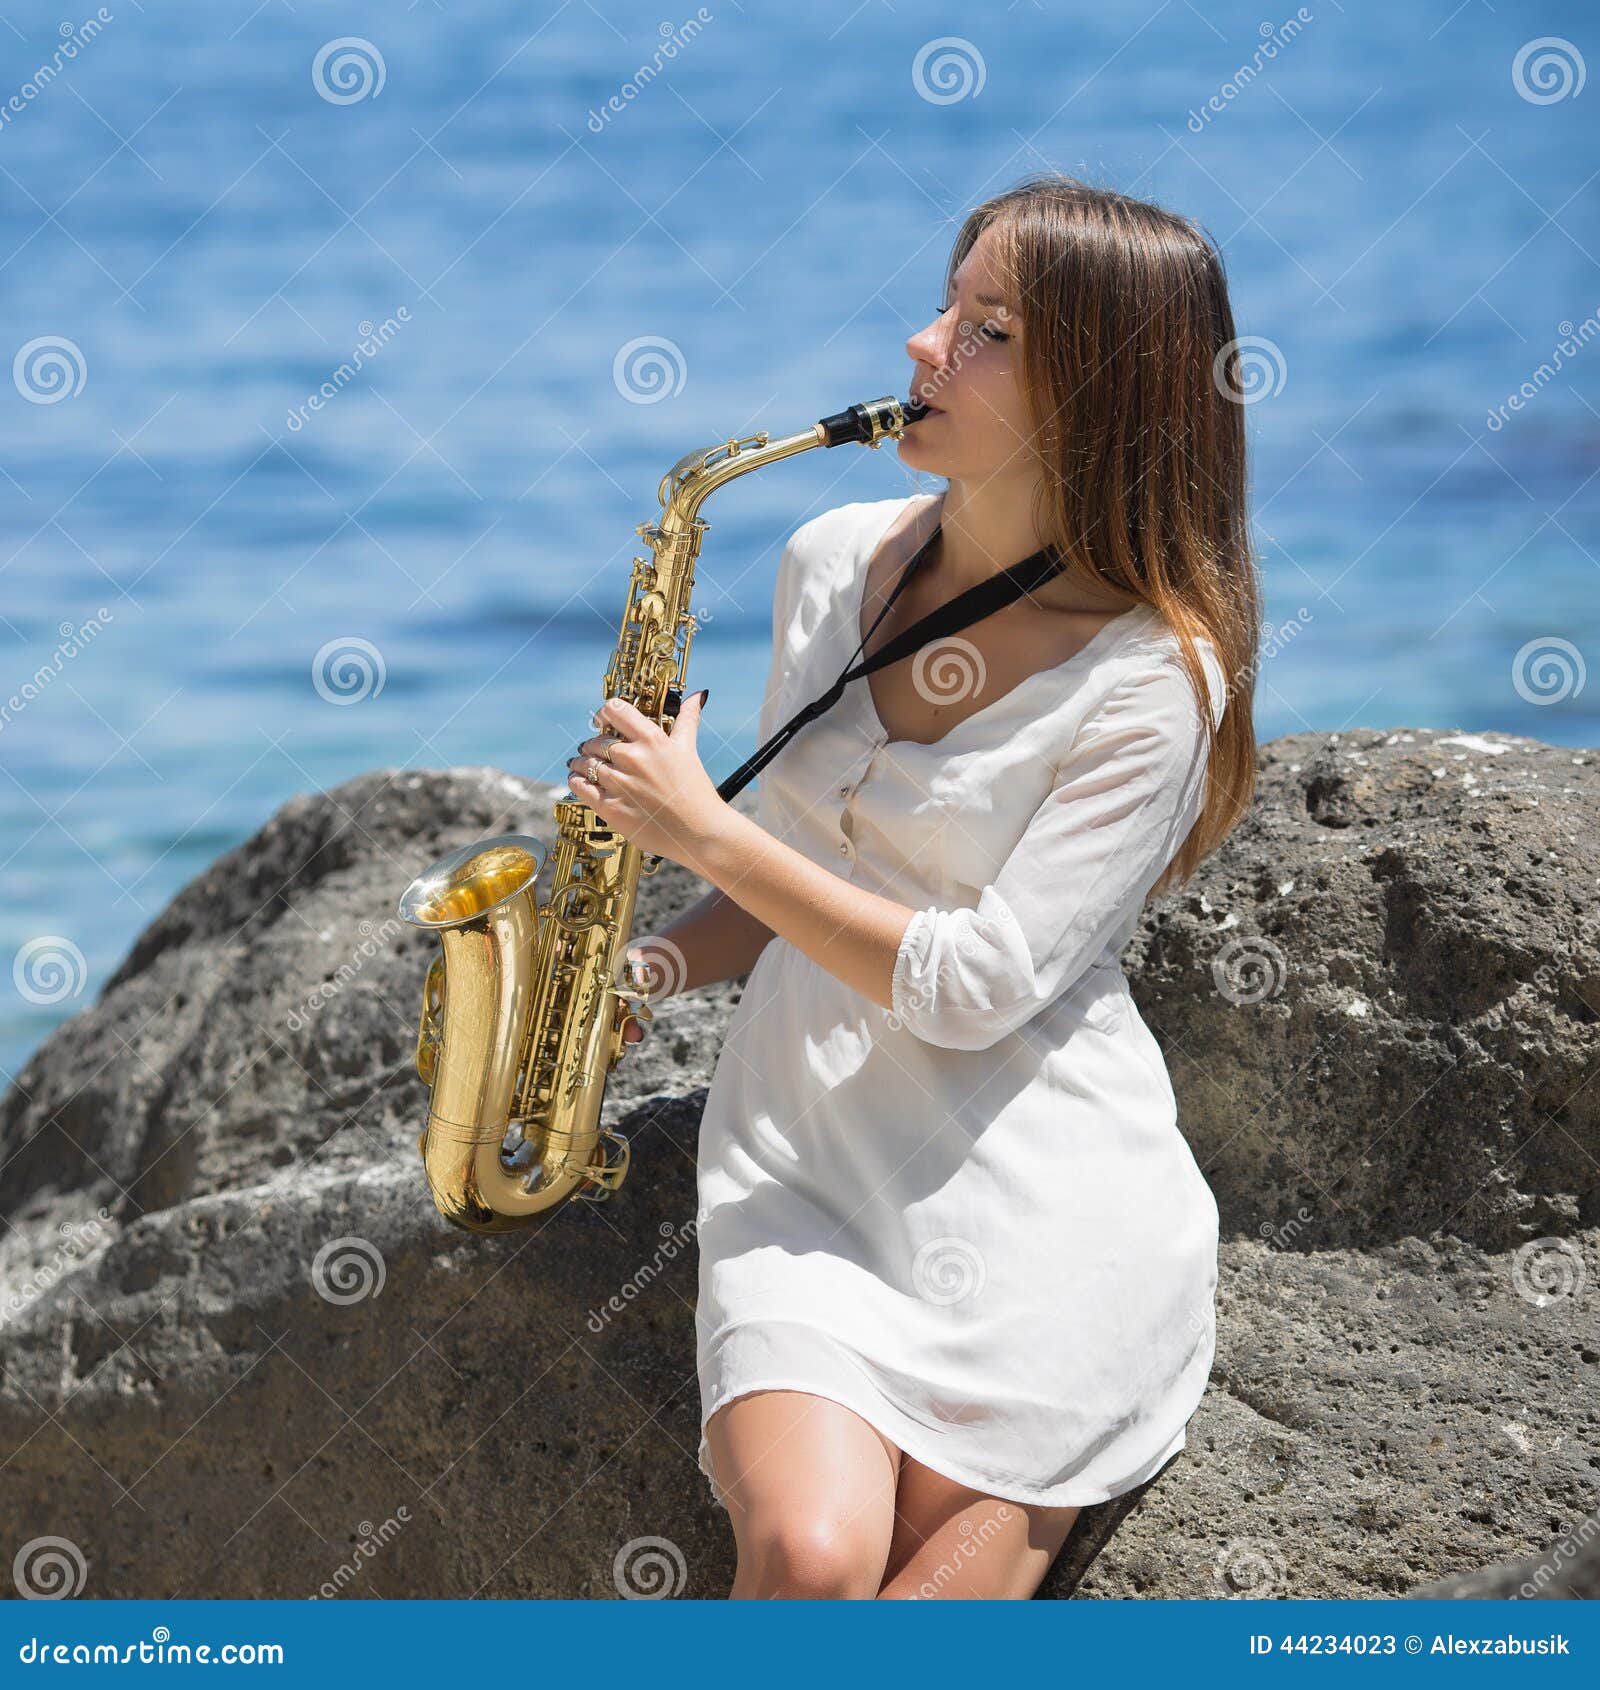 Девушка на саксофоне в студии. Девушка с саксофоном. Девушка с саксофоном на берегу моря. Девушка играет на саксофоне. Саксофонистки море.